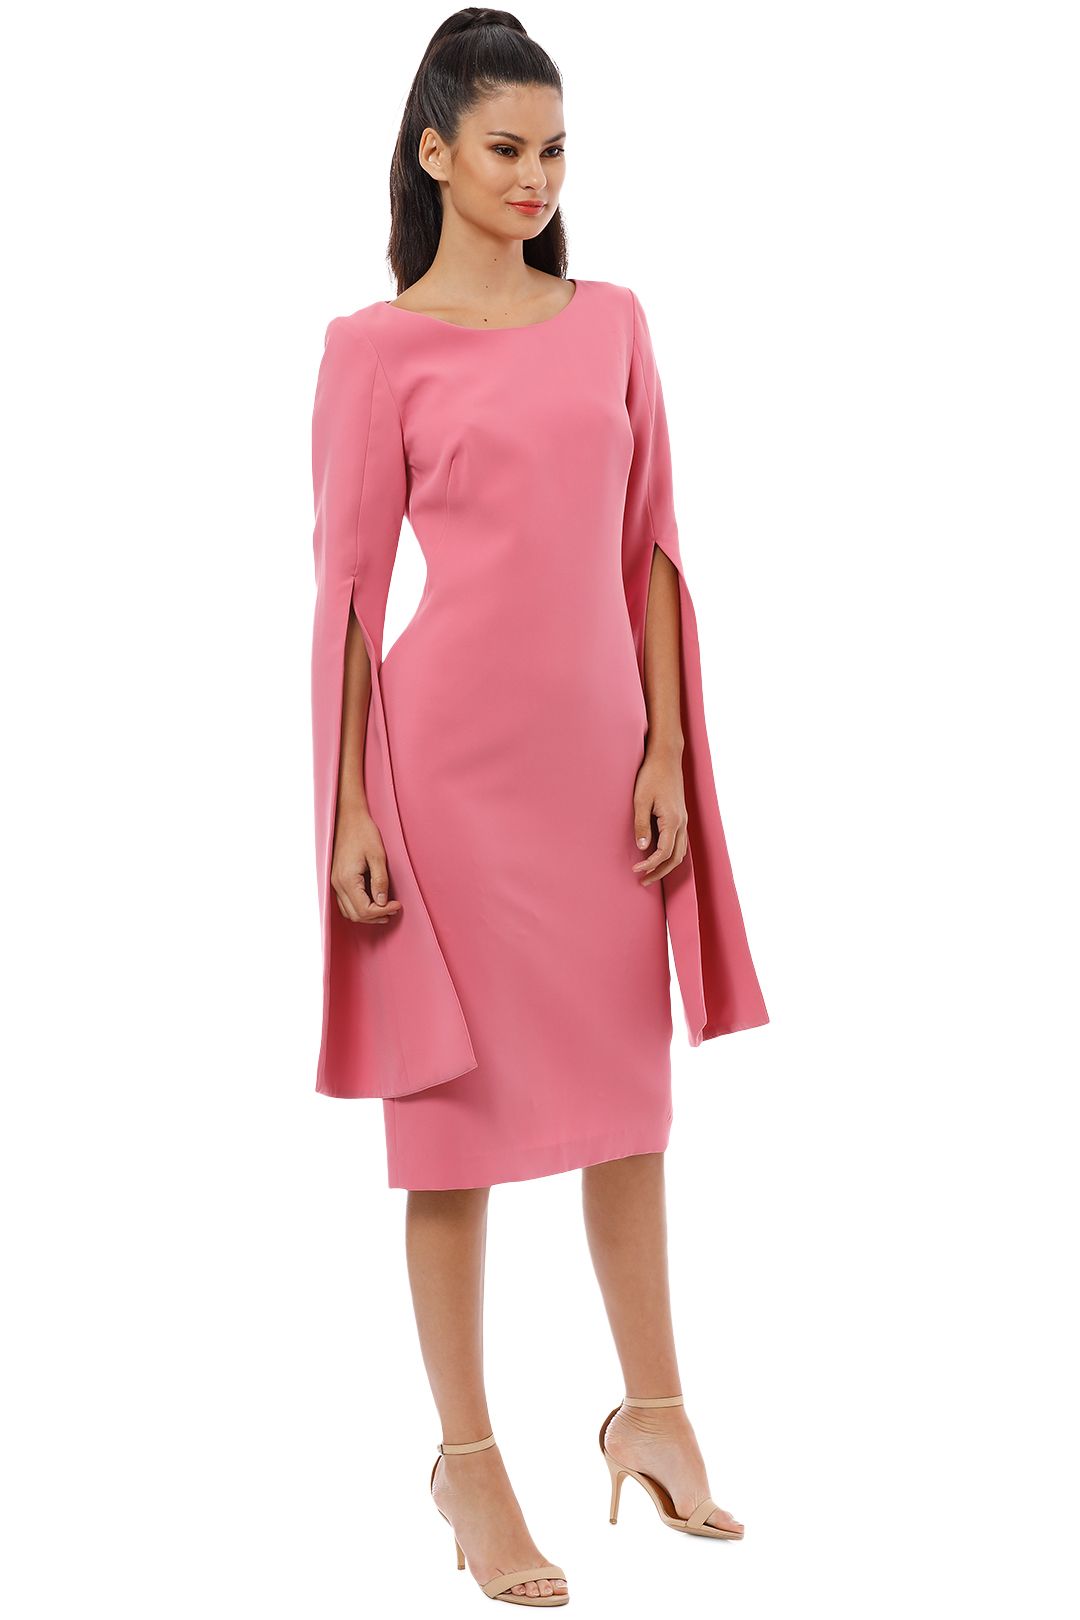 Trelise Cooper - Up Your Sleeve Dress - Pink - Side